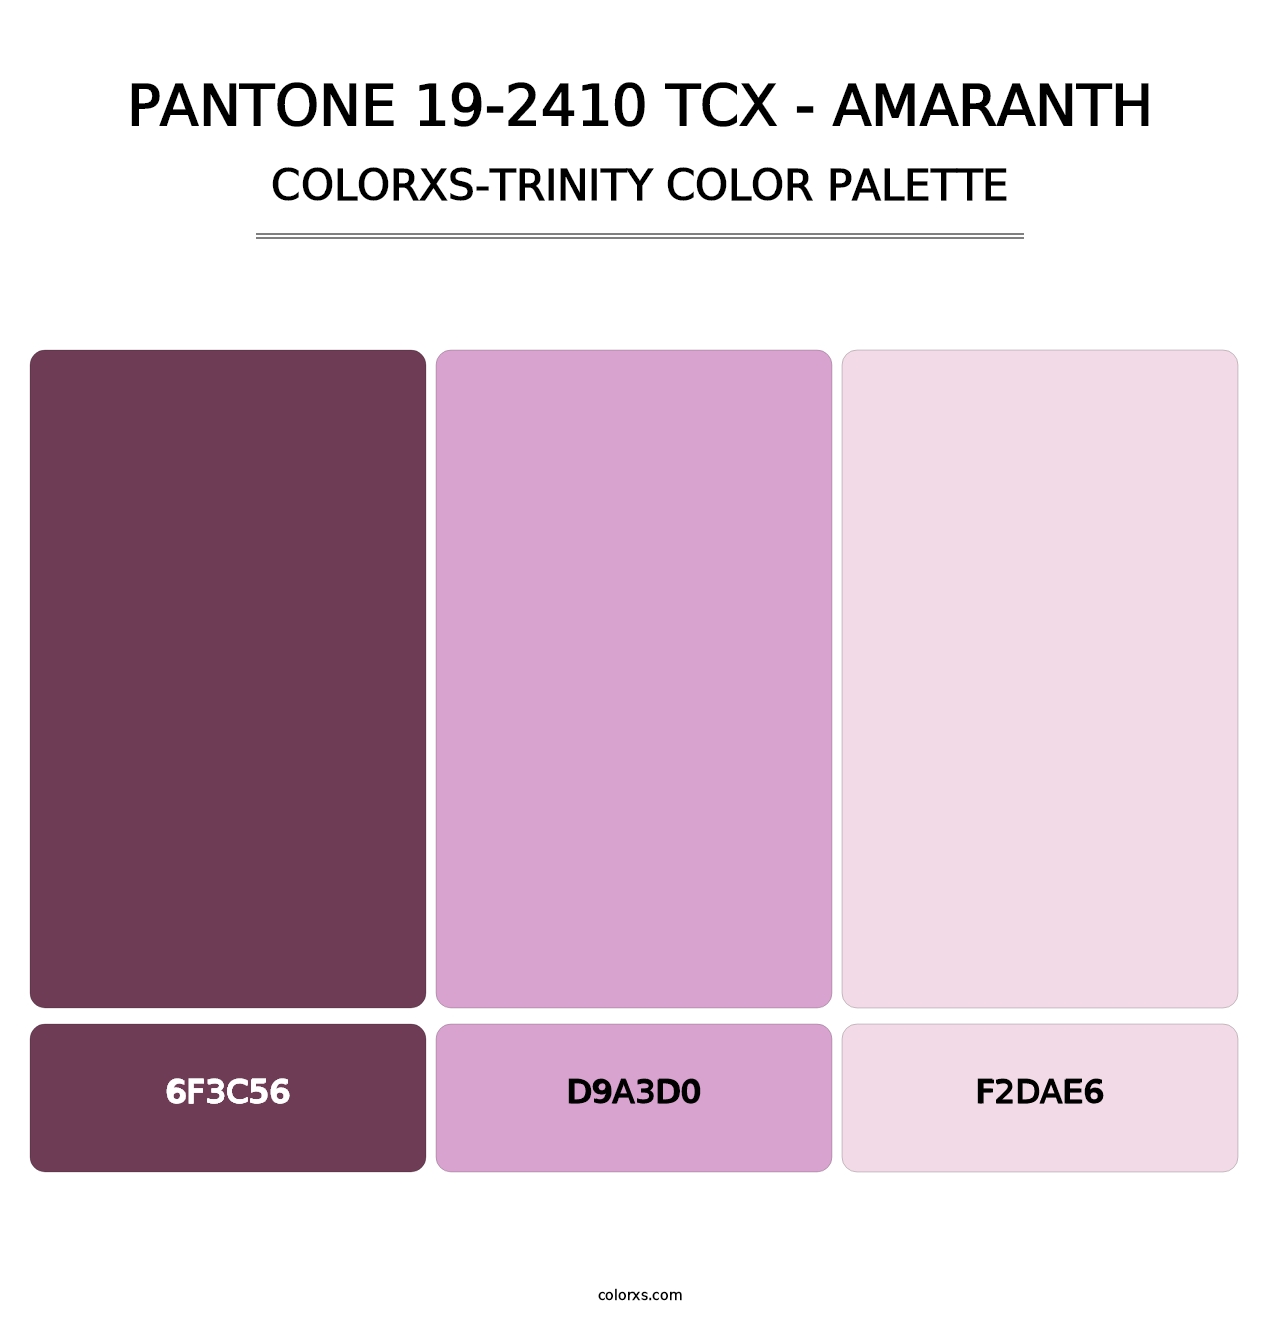 PANTONE 19-2410 TCX - Amaranth - Colorxs Trinity Palette